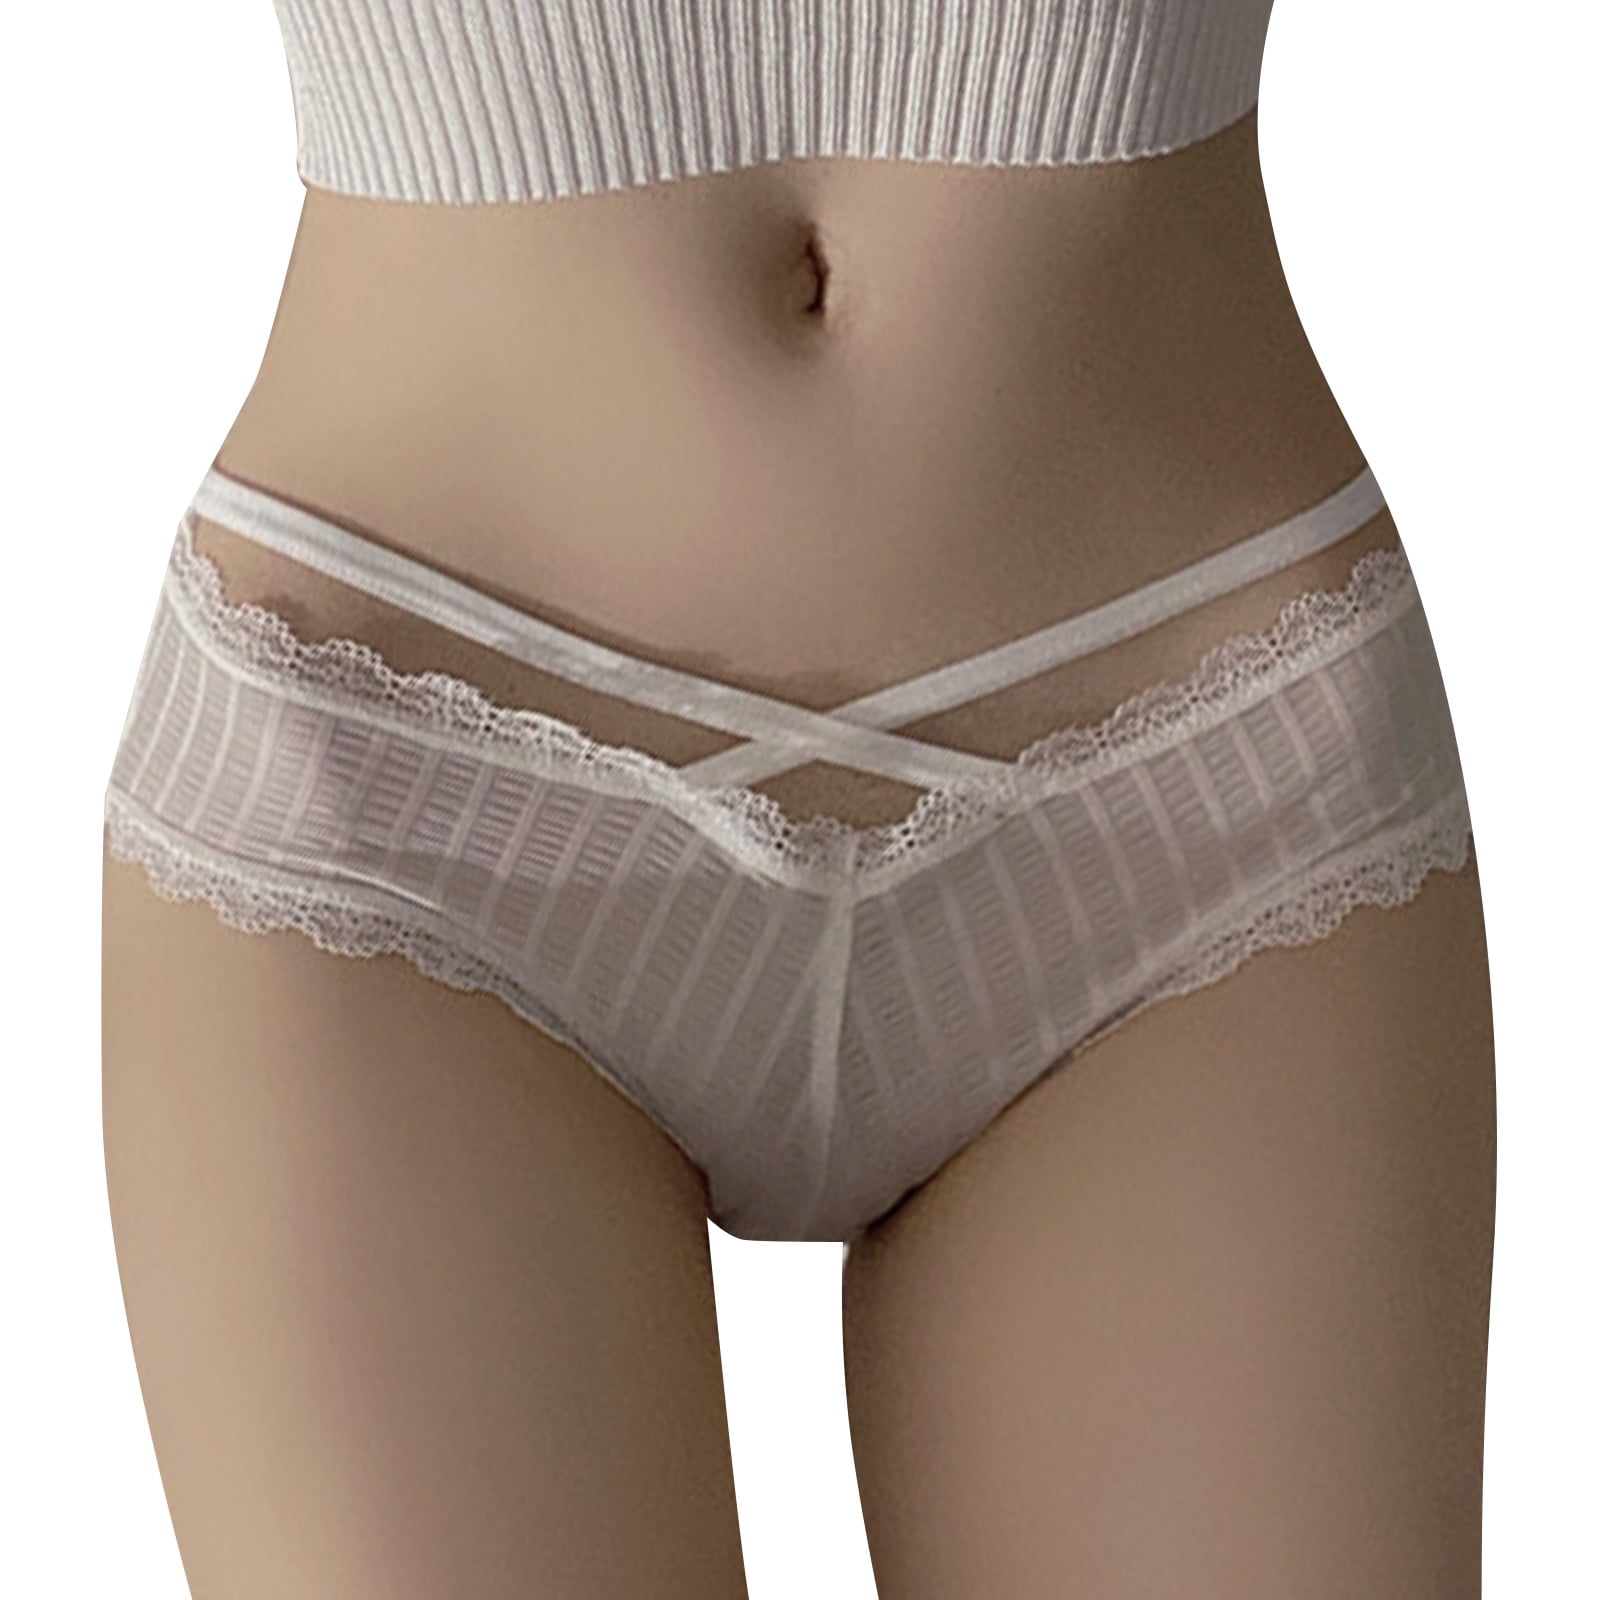 NRUDPQV low waist sexi mature girls tight ladies size sex lace trim spandex pantys brief underwear for women